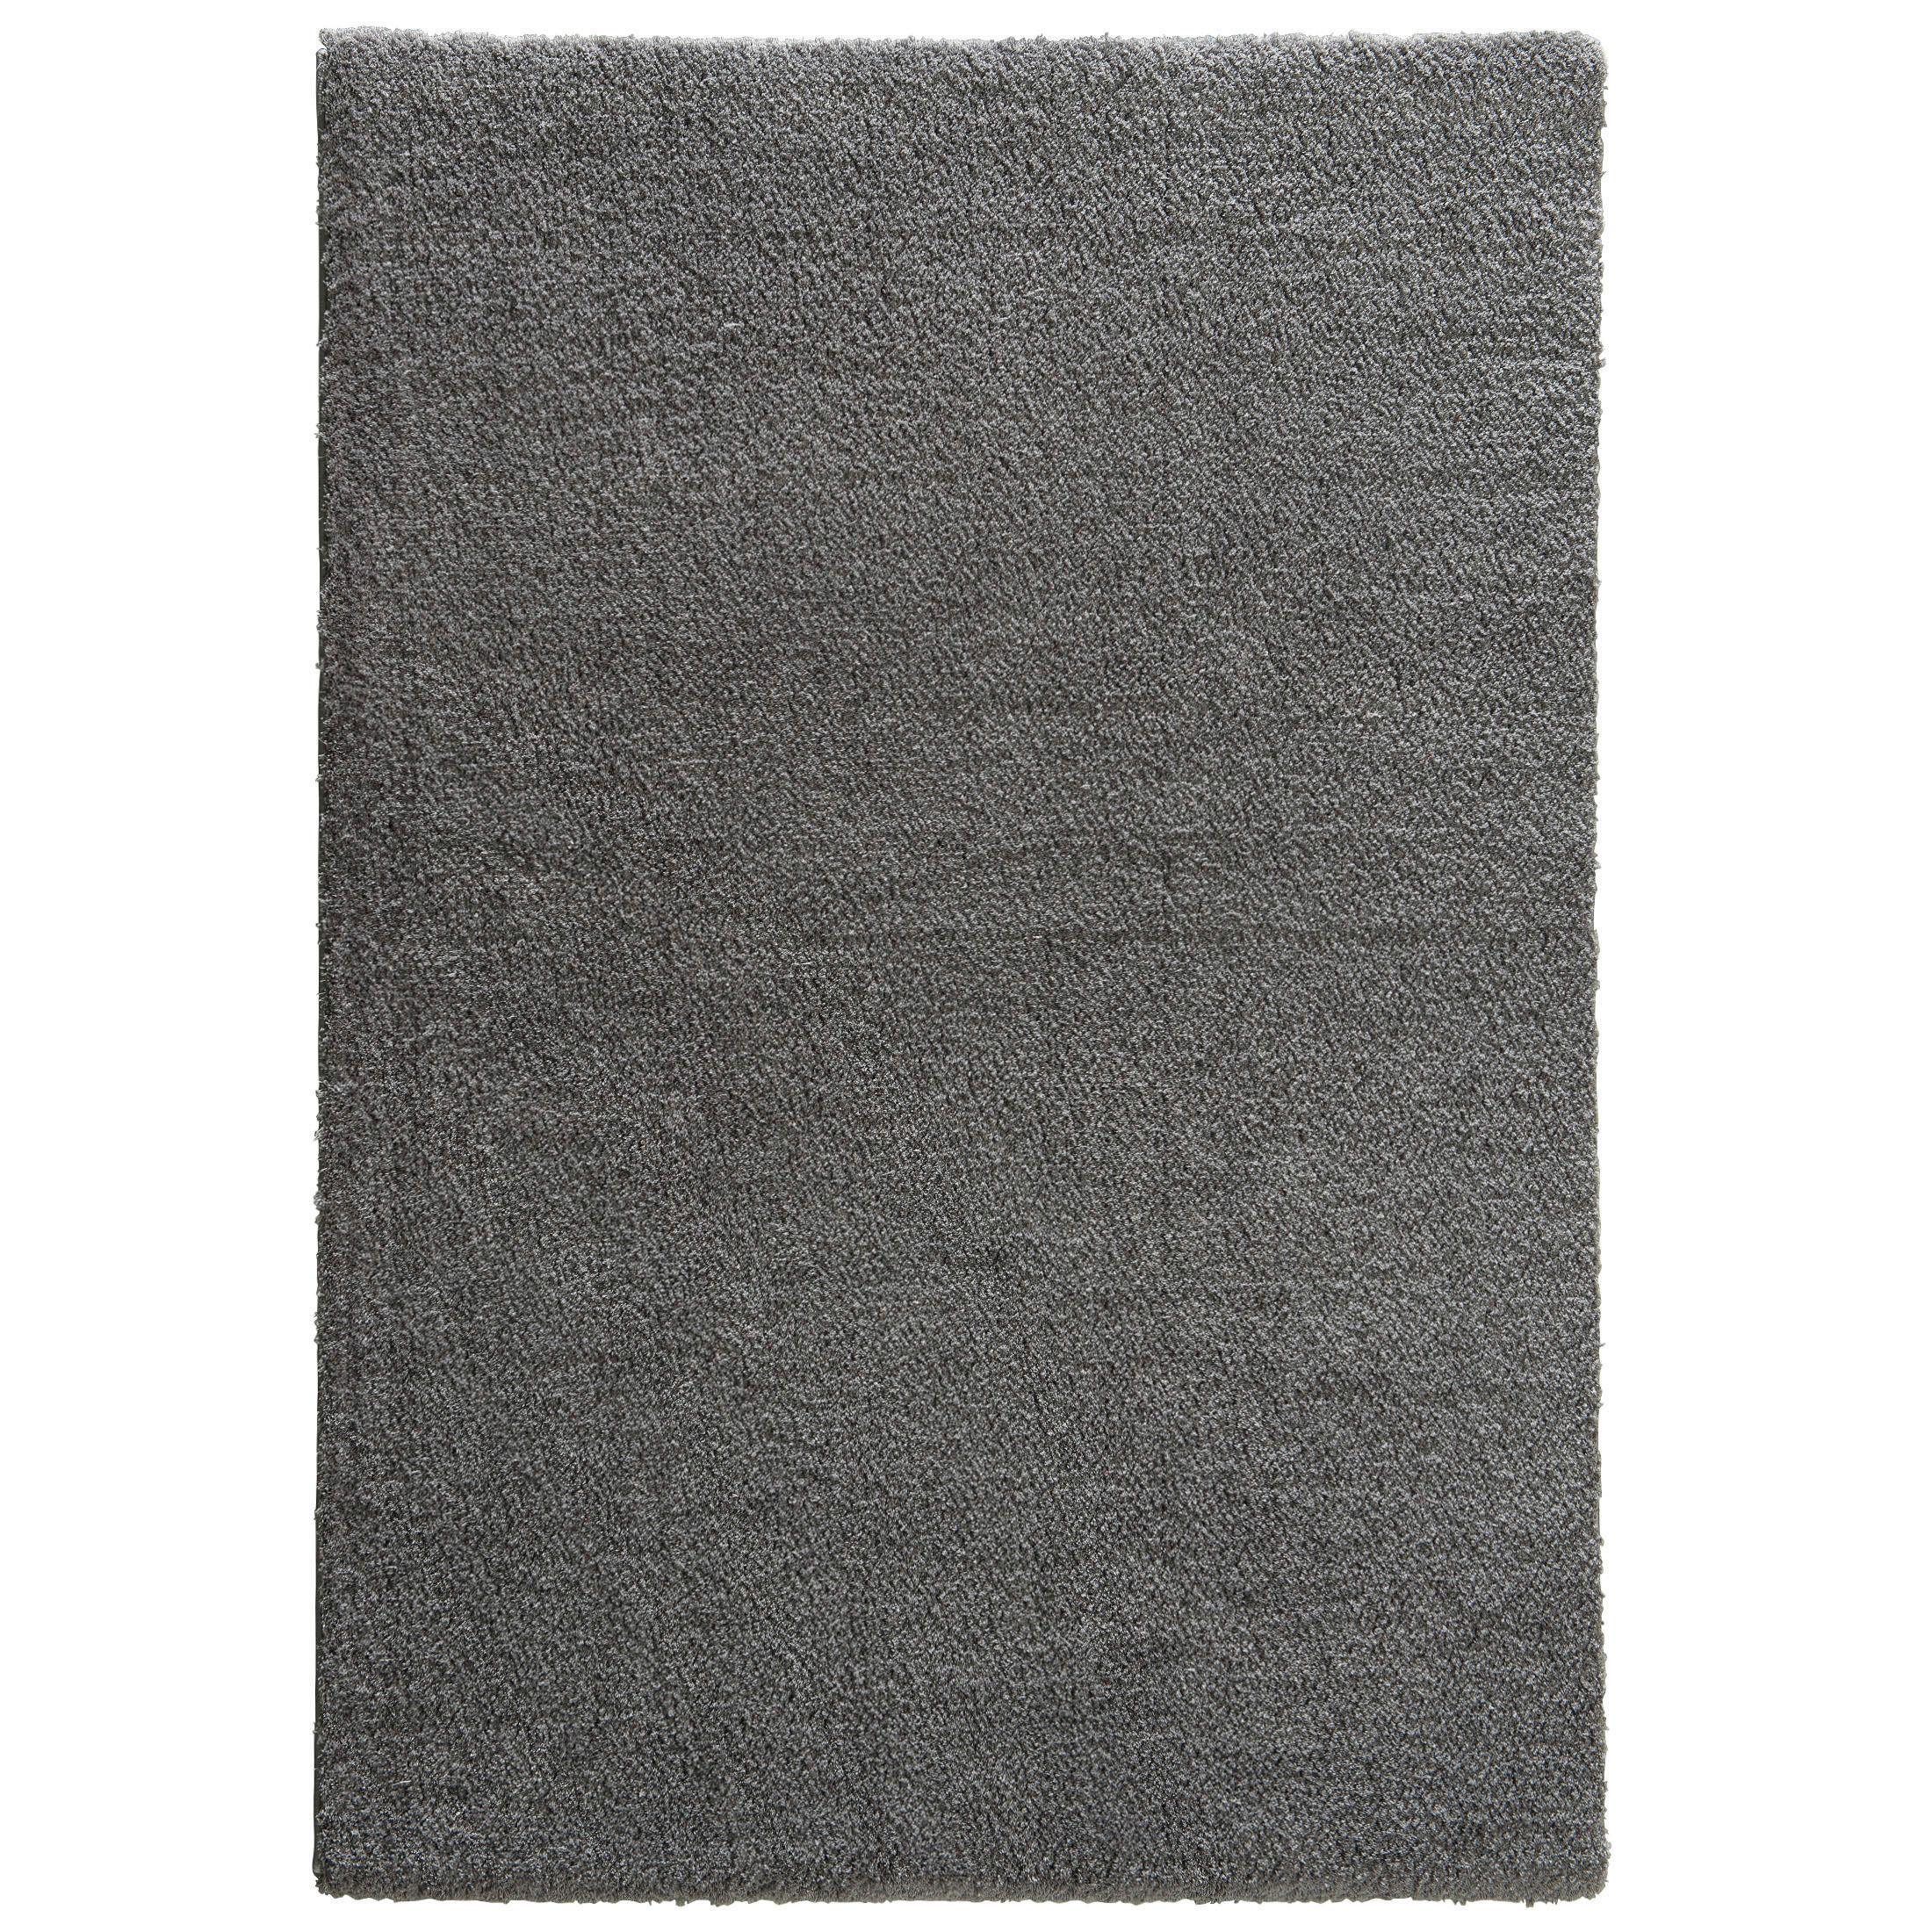 HOCHFLORTEPPICH 133/190 cm New Livorno  - Grau, Basics, Textil (133/190cm) - Novel